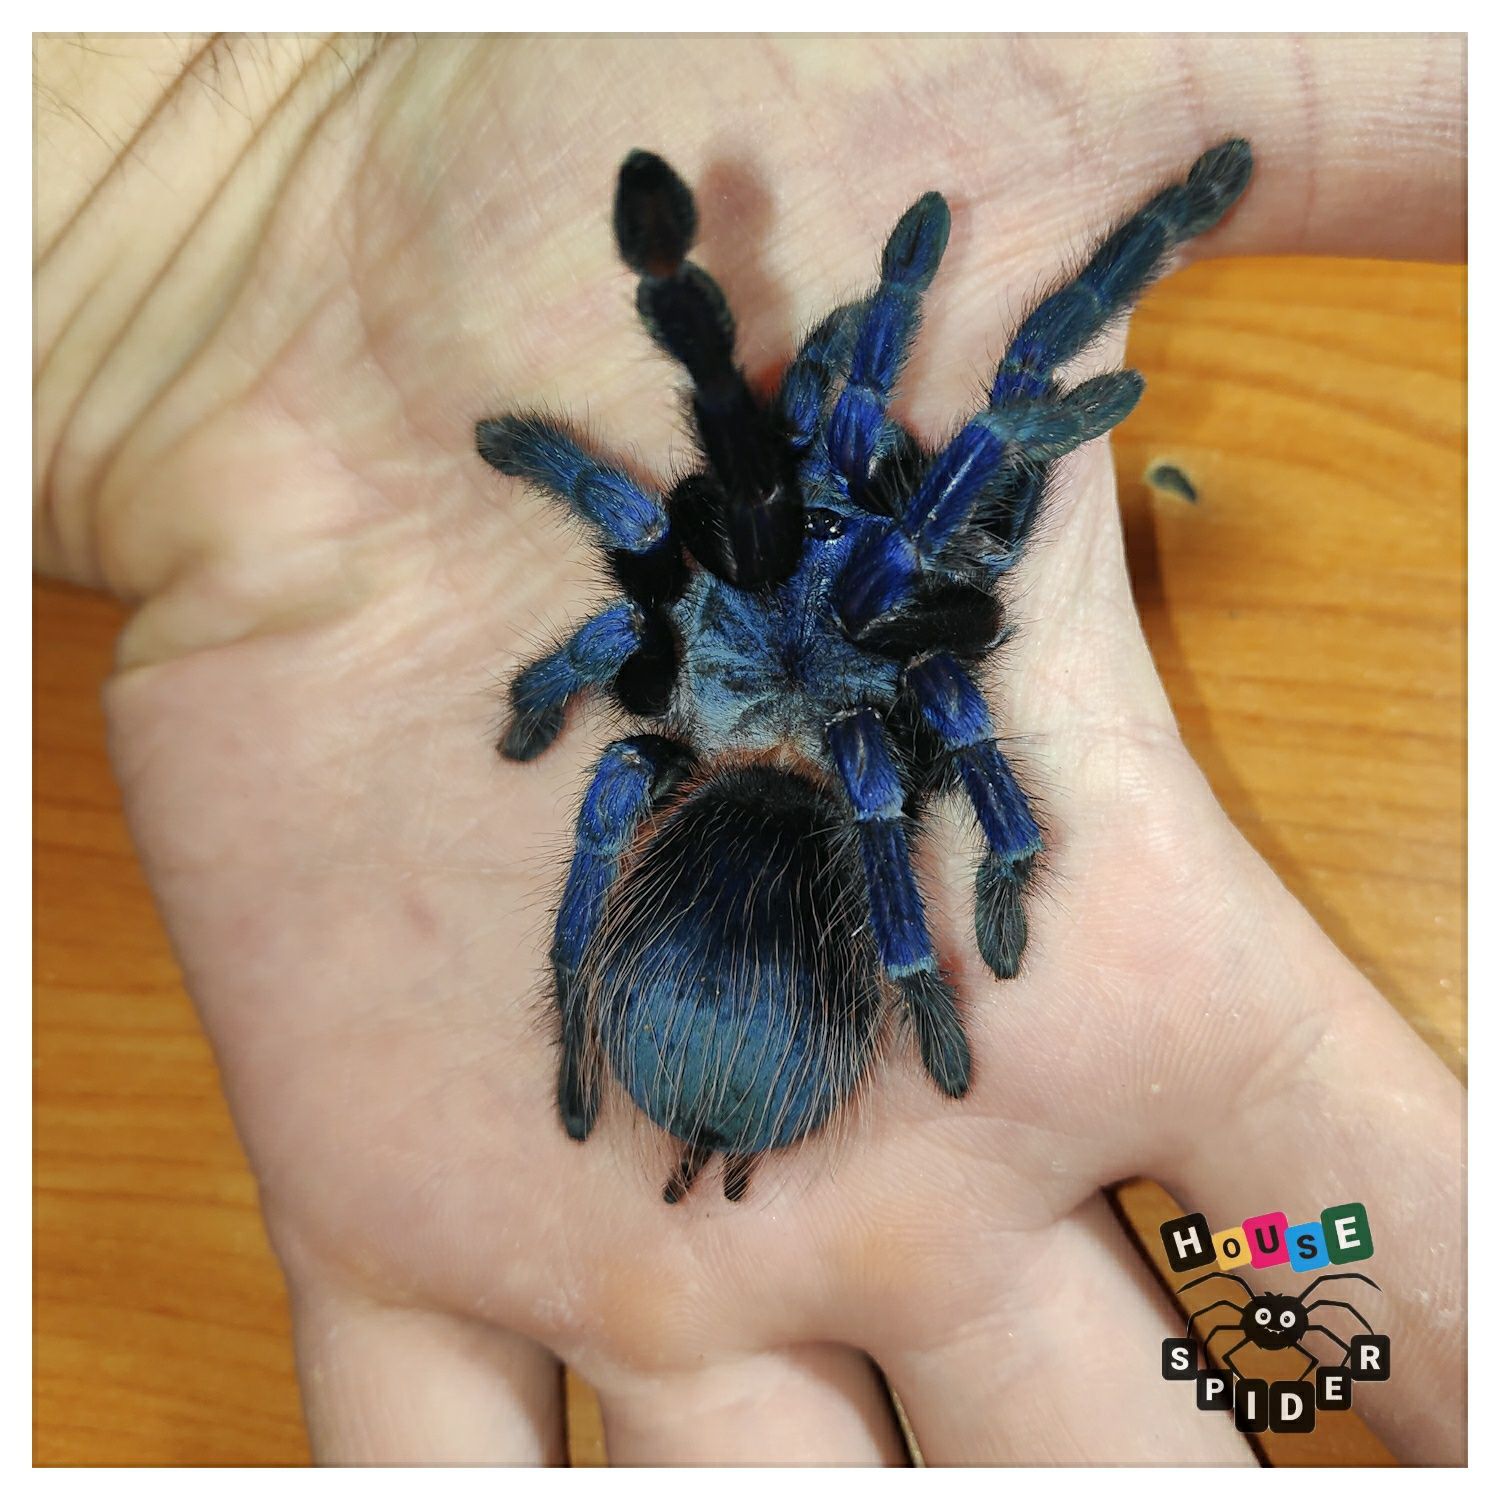 Шикарный синий паук птицеед тарантул для новичков малыши хобби